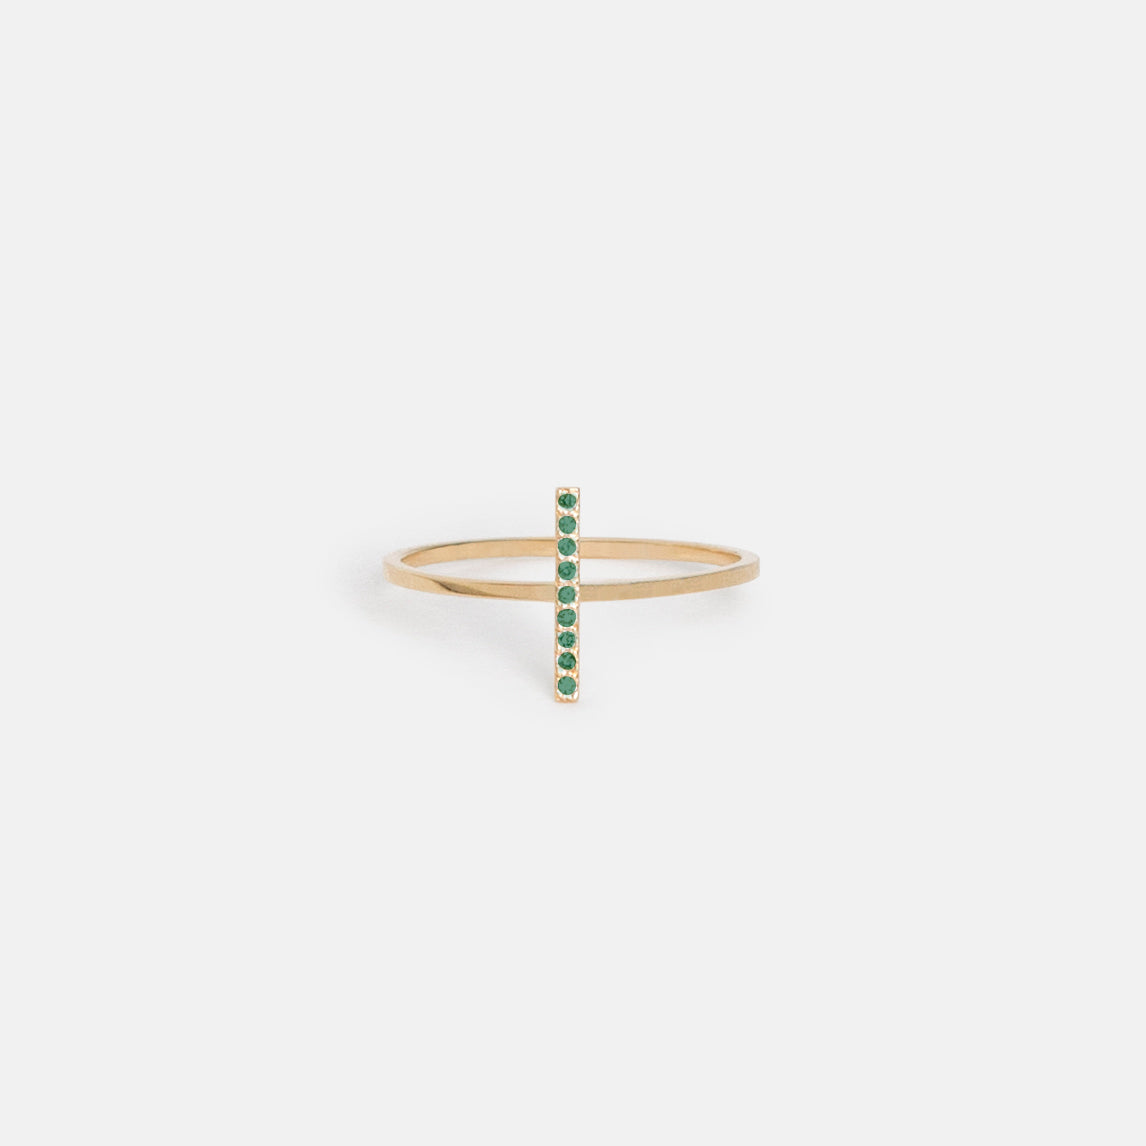 Steva Alternative Ring in 14k Gold set with Emeralds by SHW Fine Jewelry